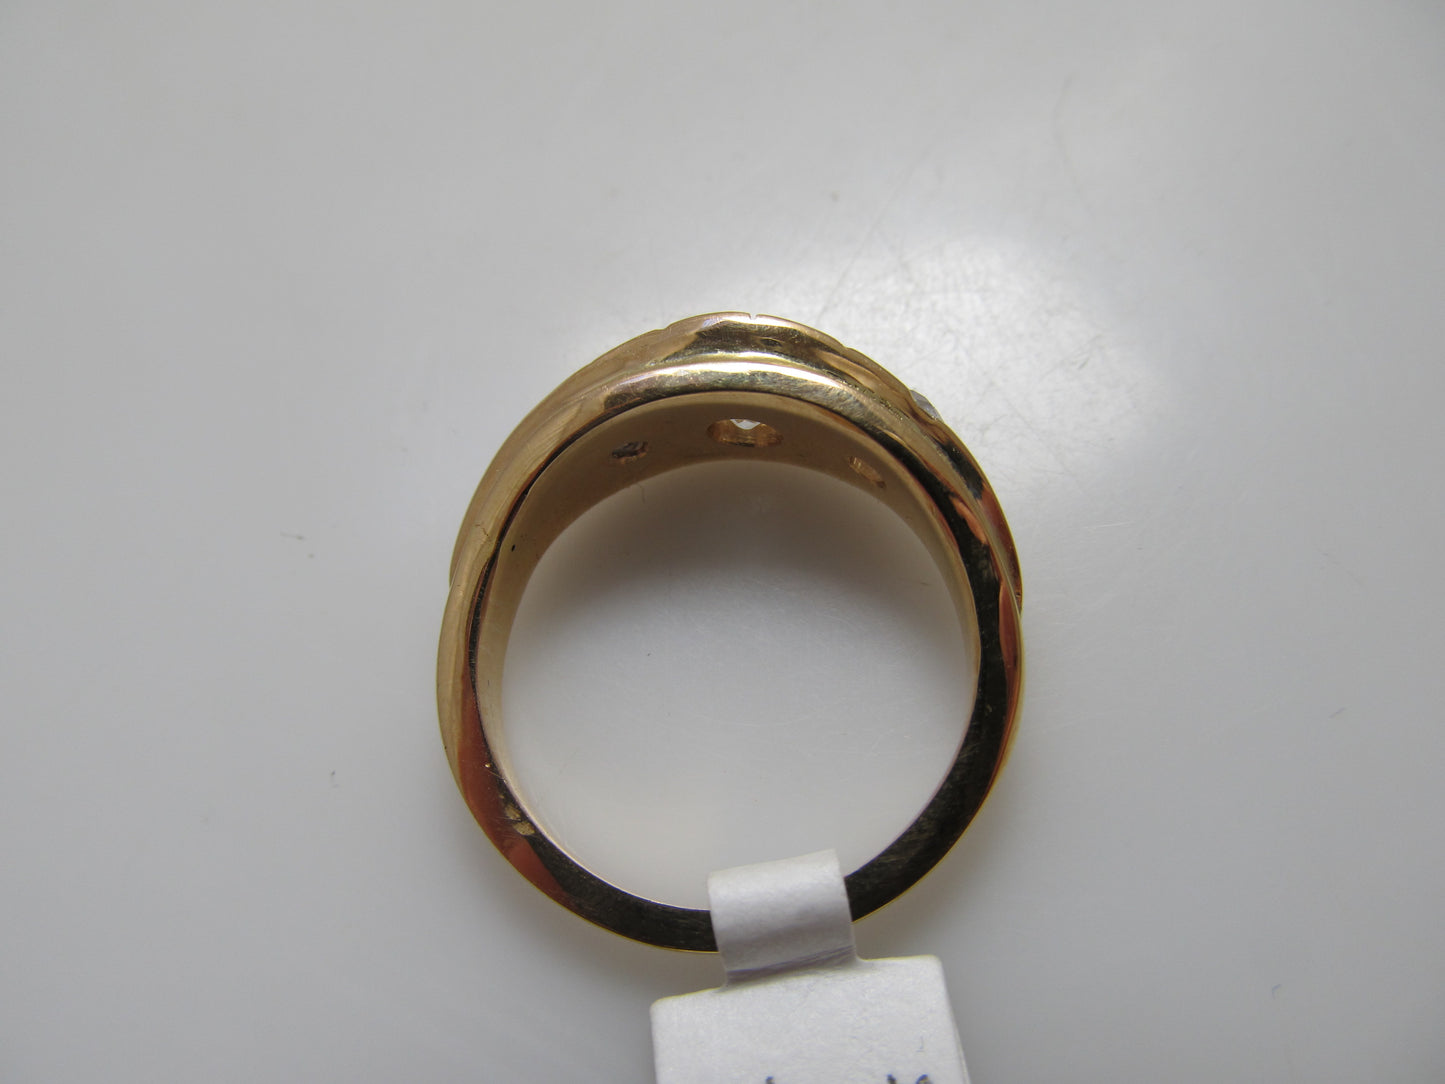 Vintage diamond gypsy ring